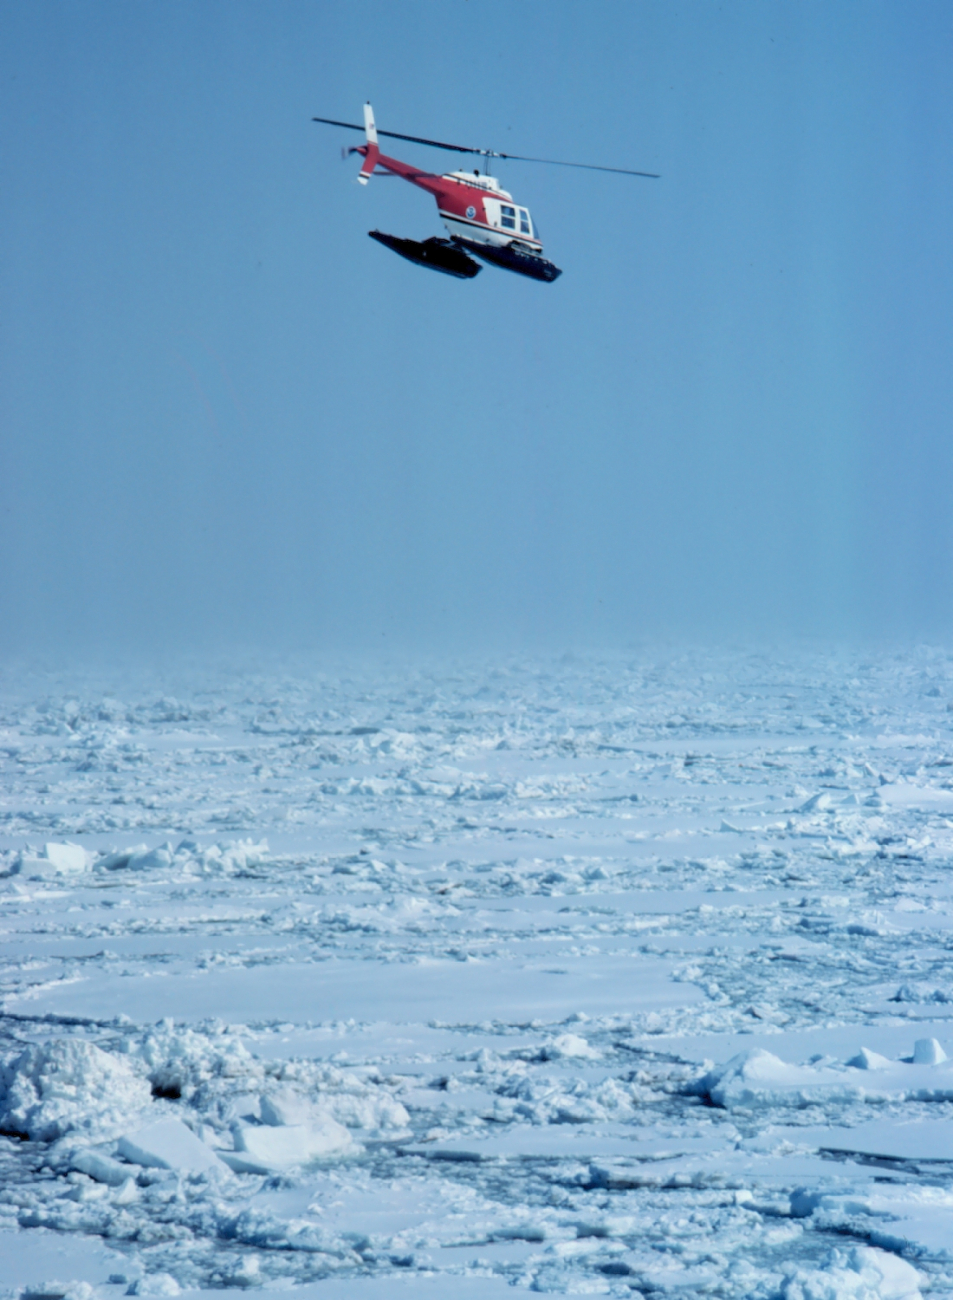 Lieutenant Terry Laydon leased Bell 206 during OCSEAP seal studies in Bering Sea